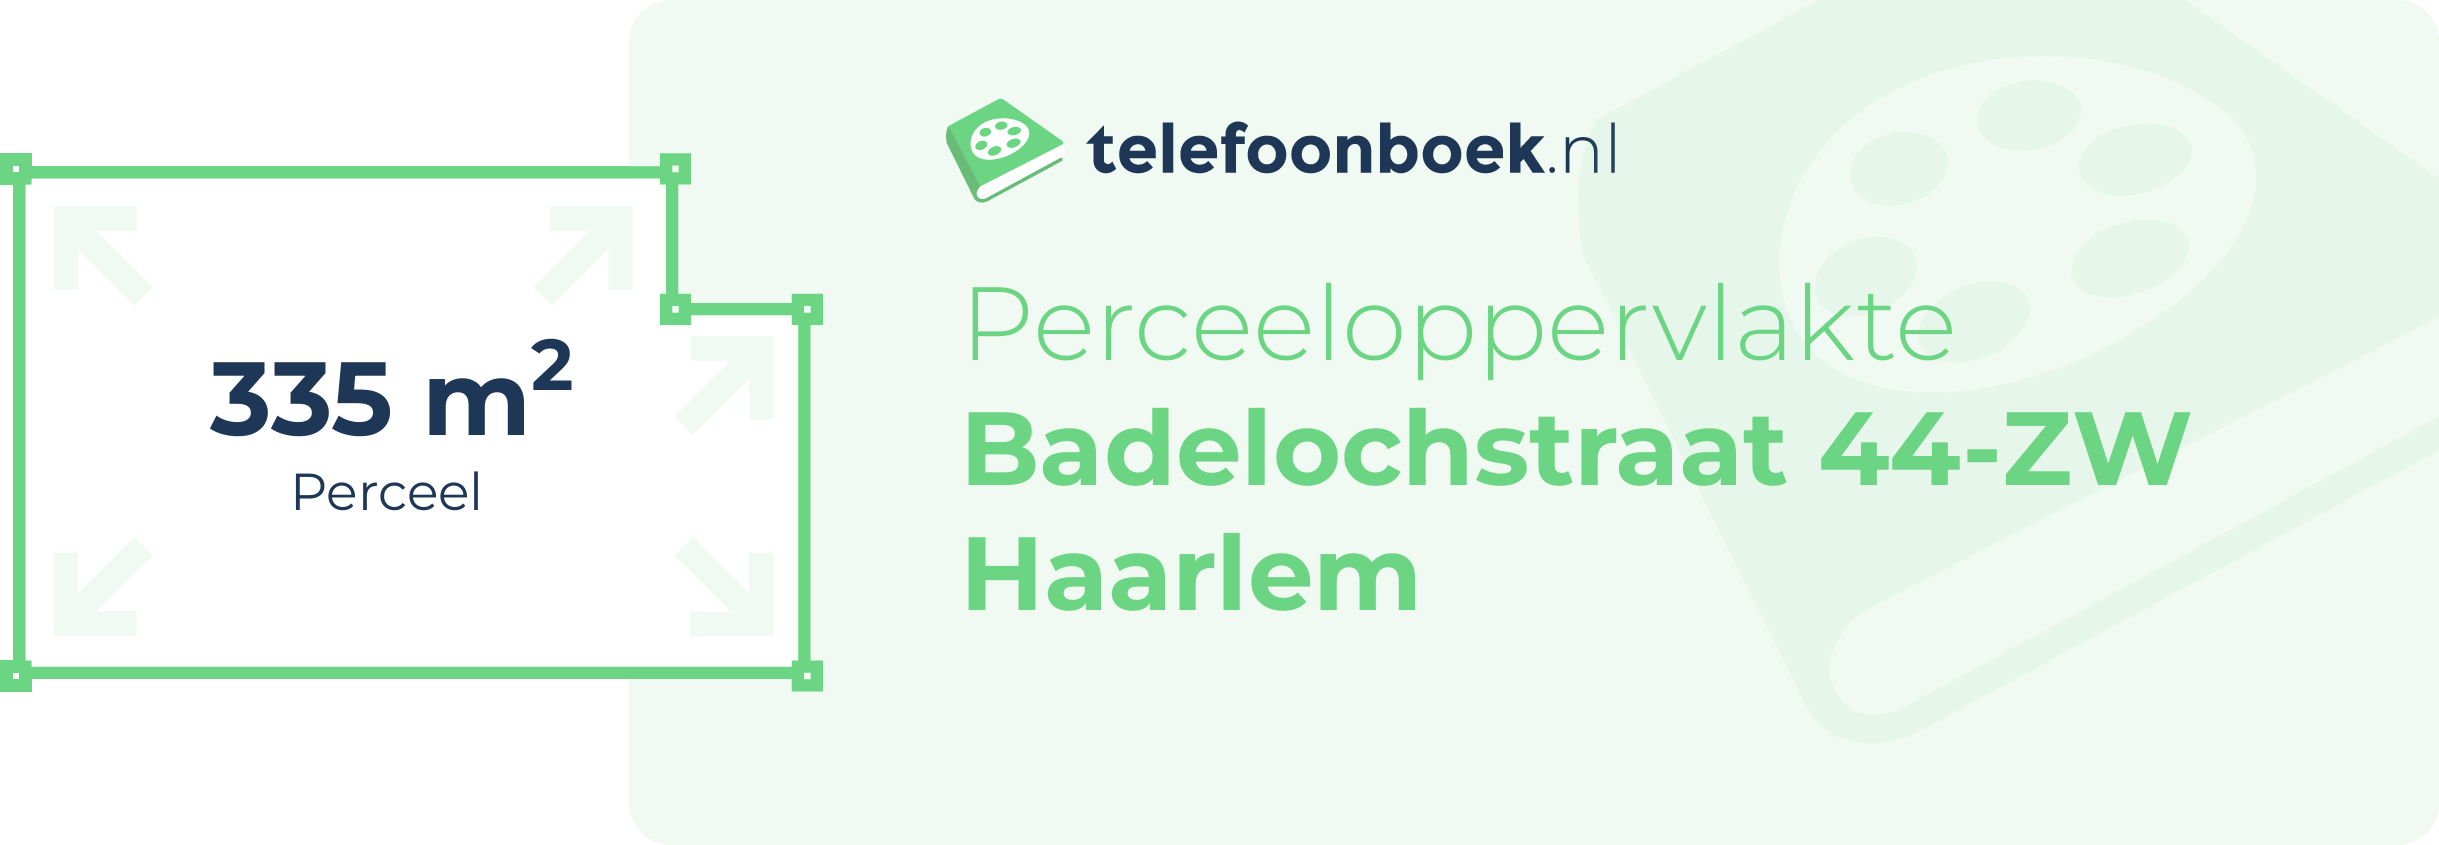 Perceeloppervlakte Badelochstraat 44-ZW Haarlem